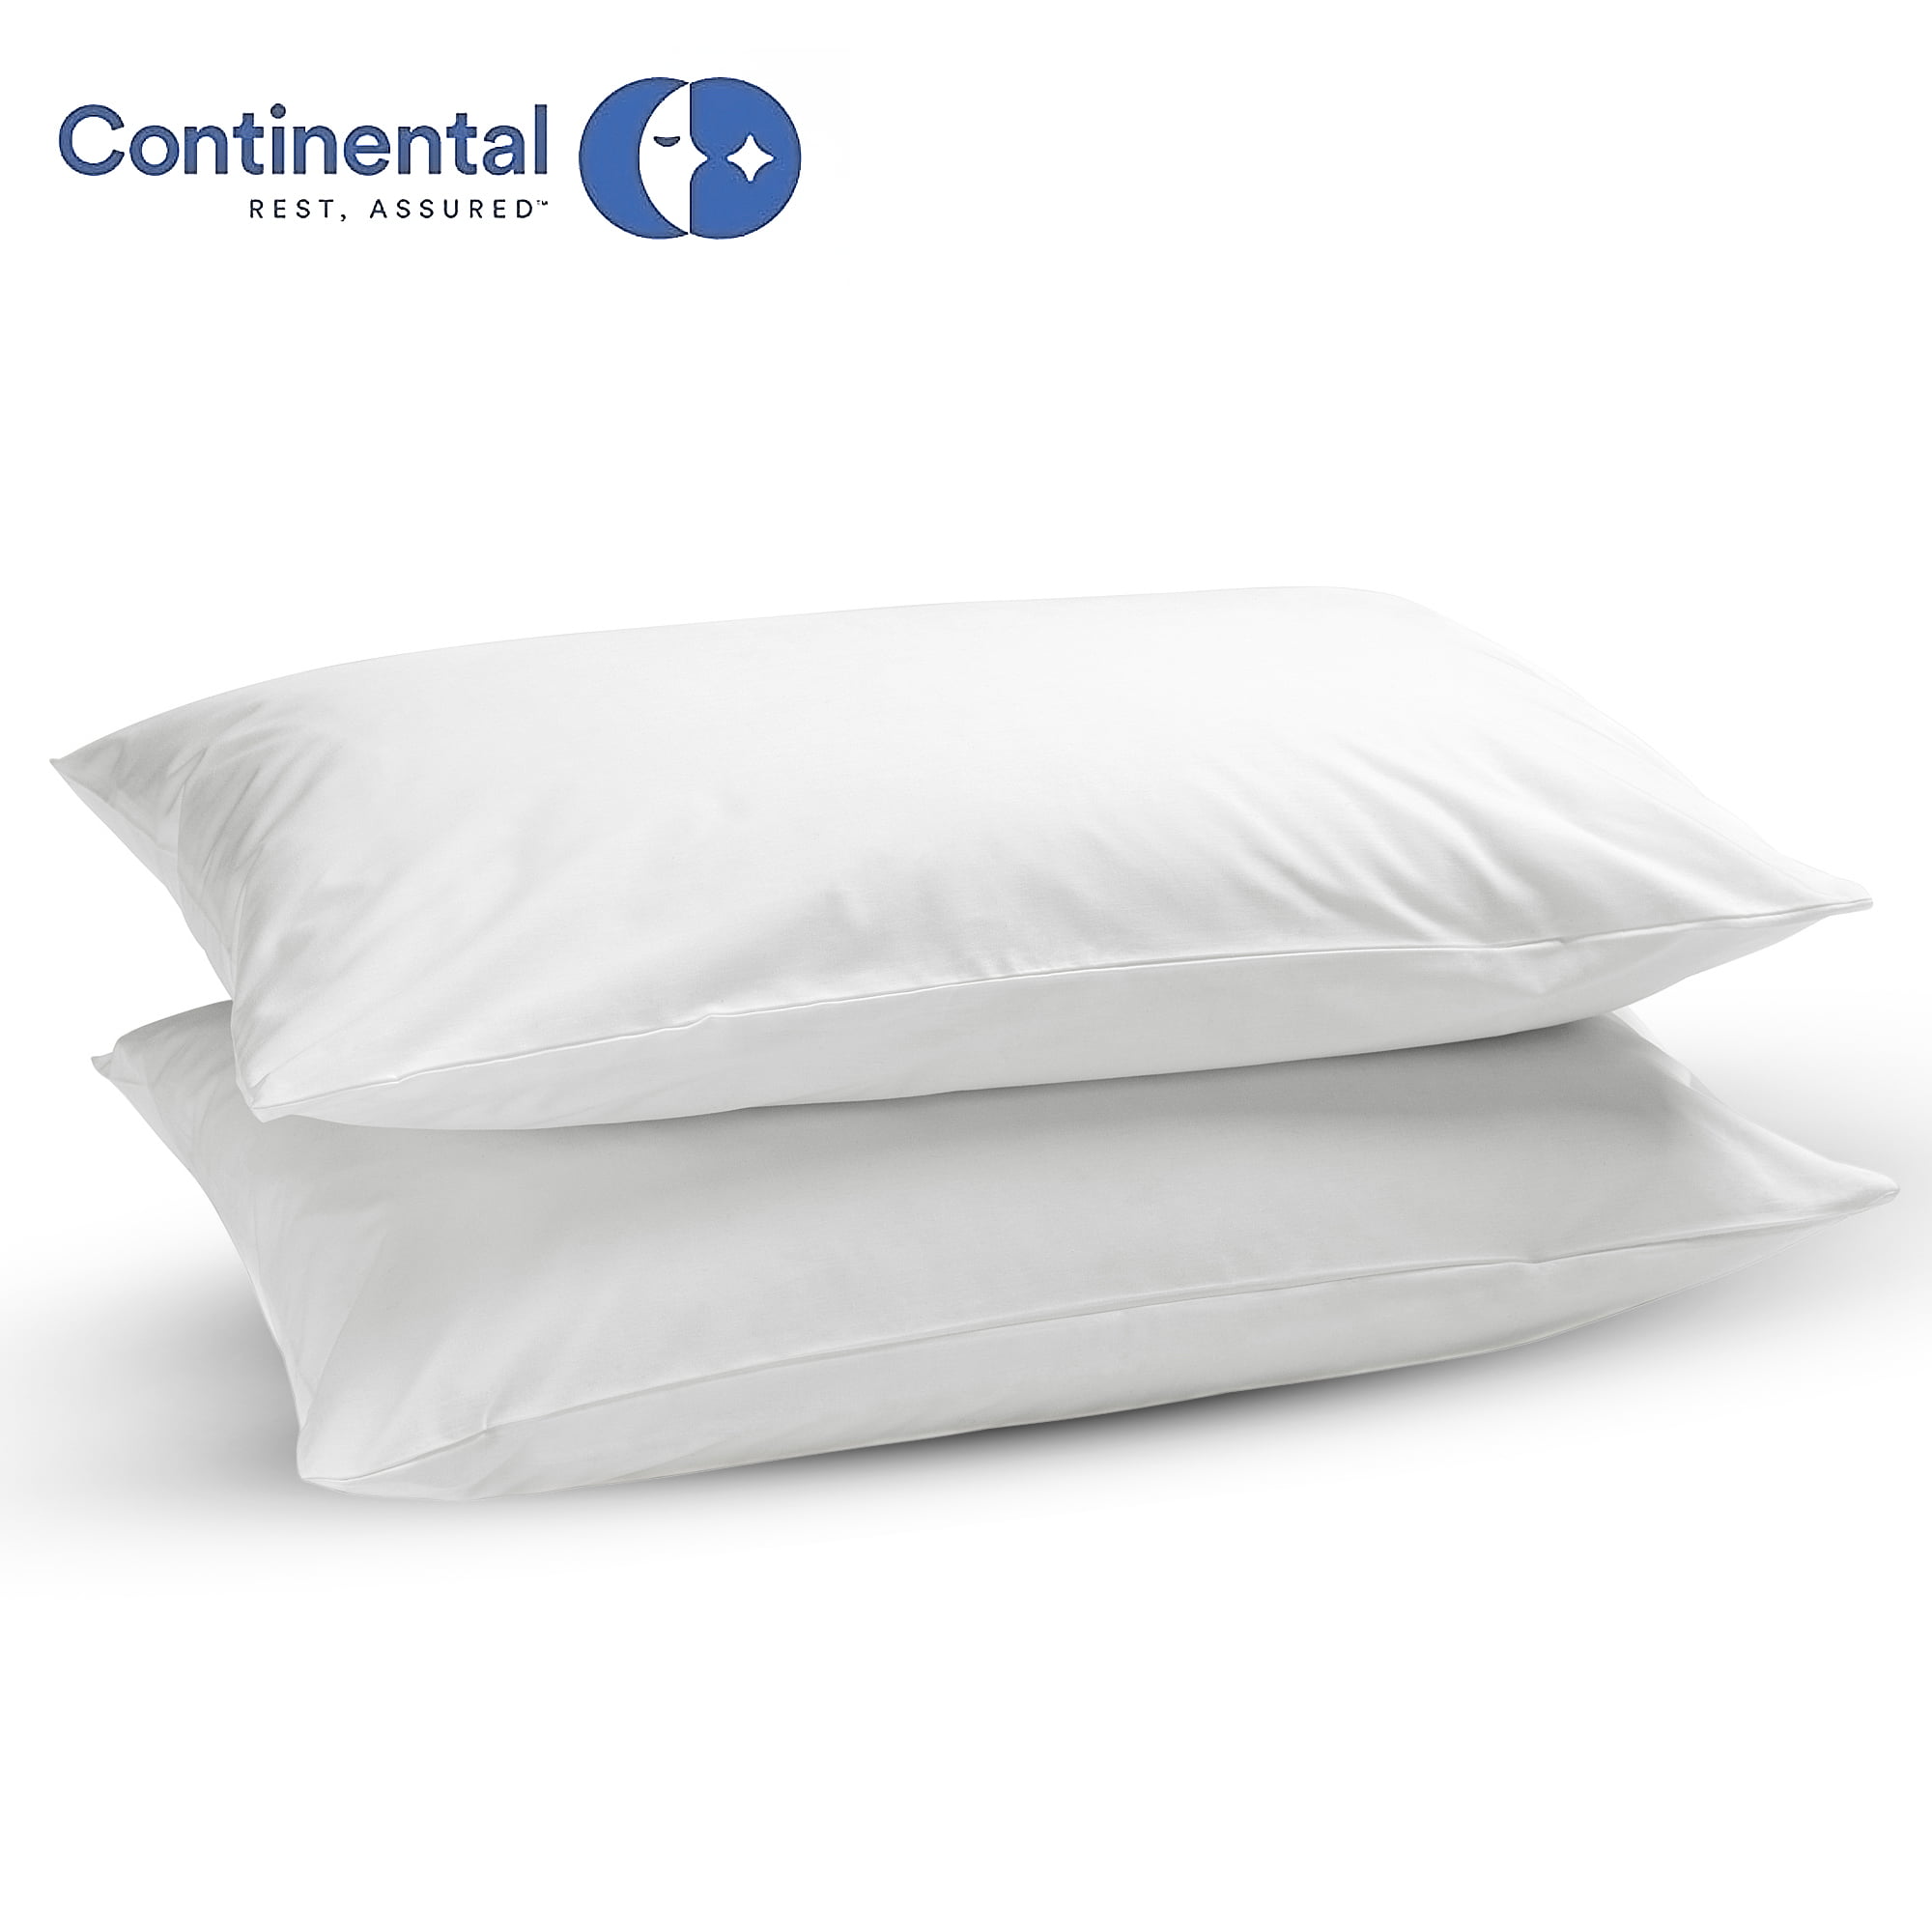 Envirosleep Dream Surrender Standard Pillow Set 2 Pillows featured in hampton in 